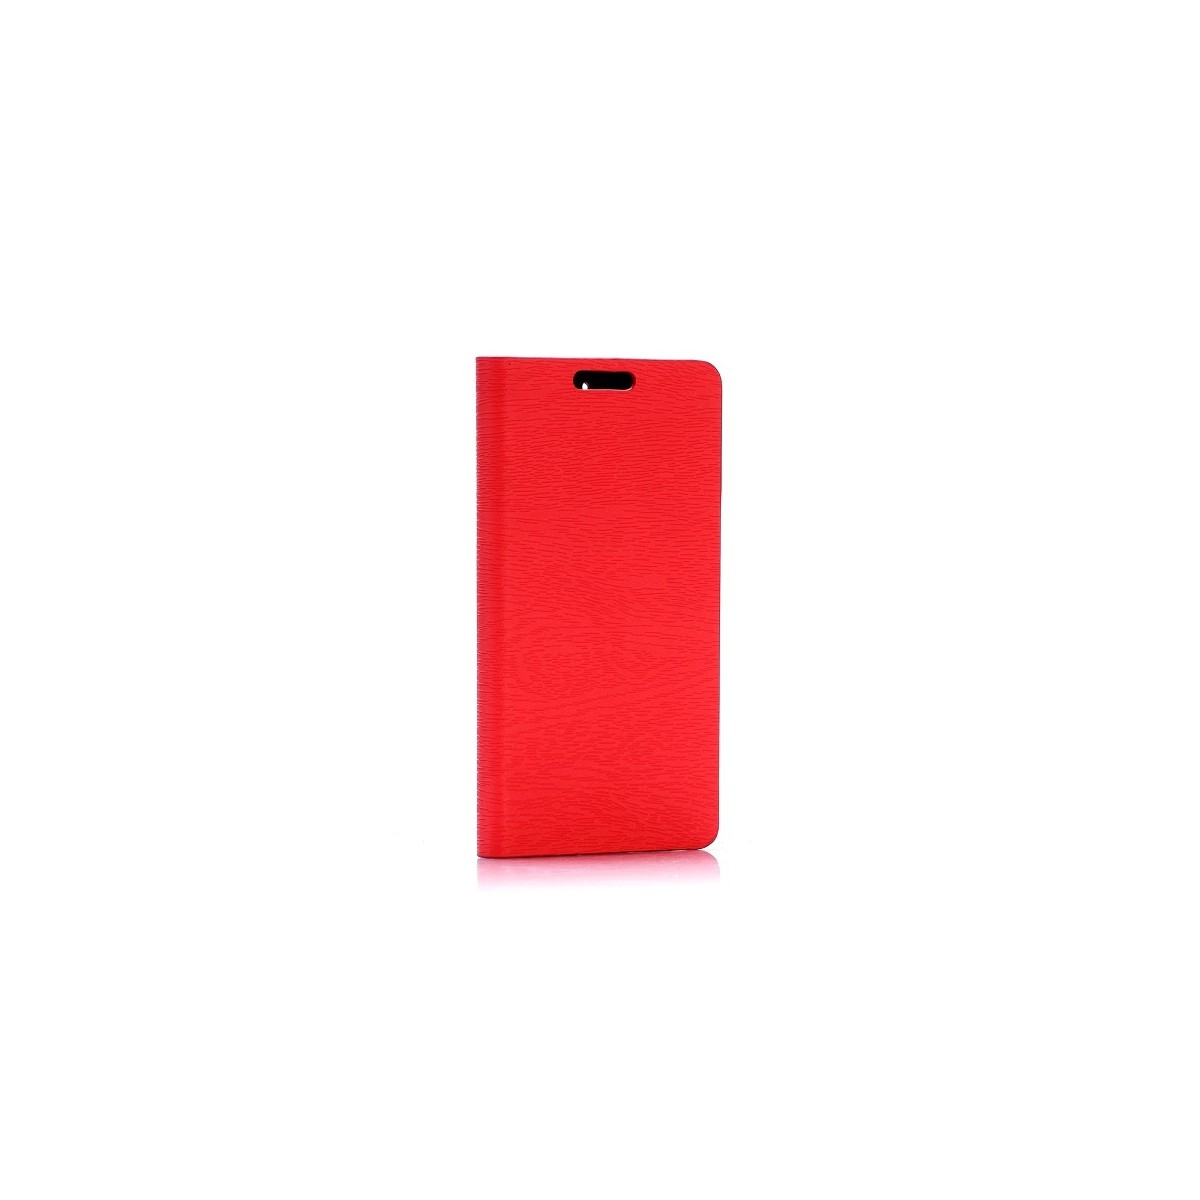 Crazy Kase - Etui HTC Desire 510 Rouge